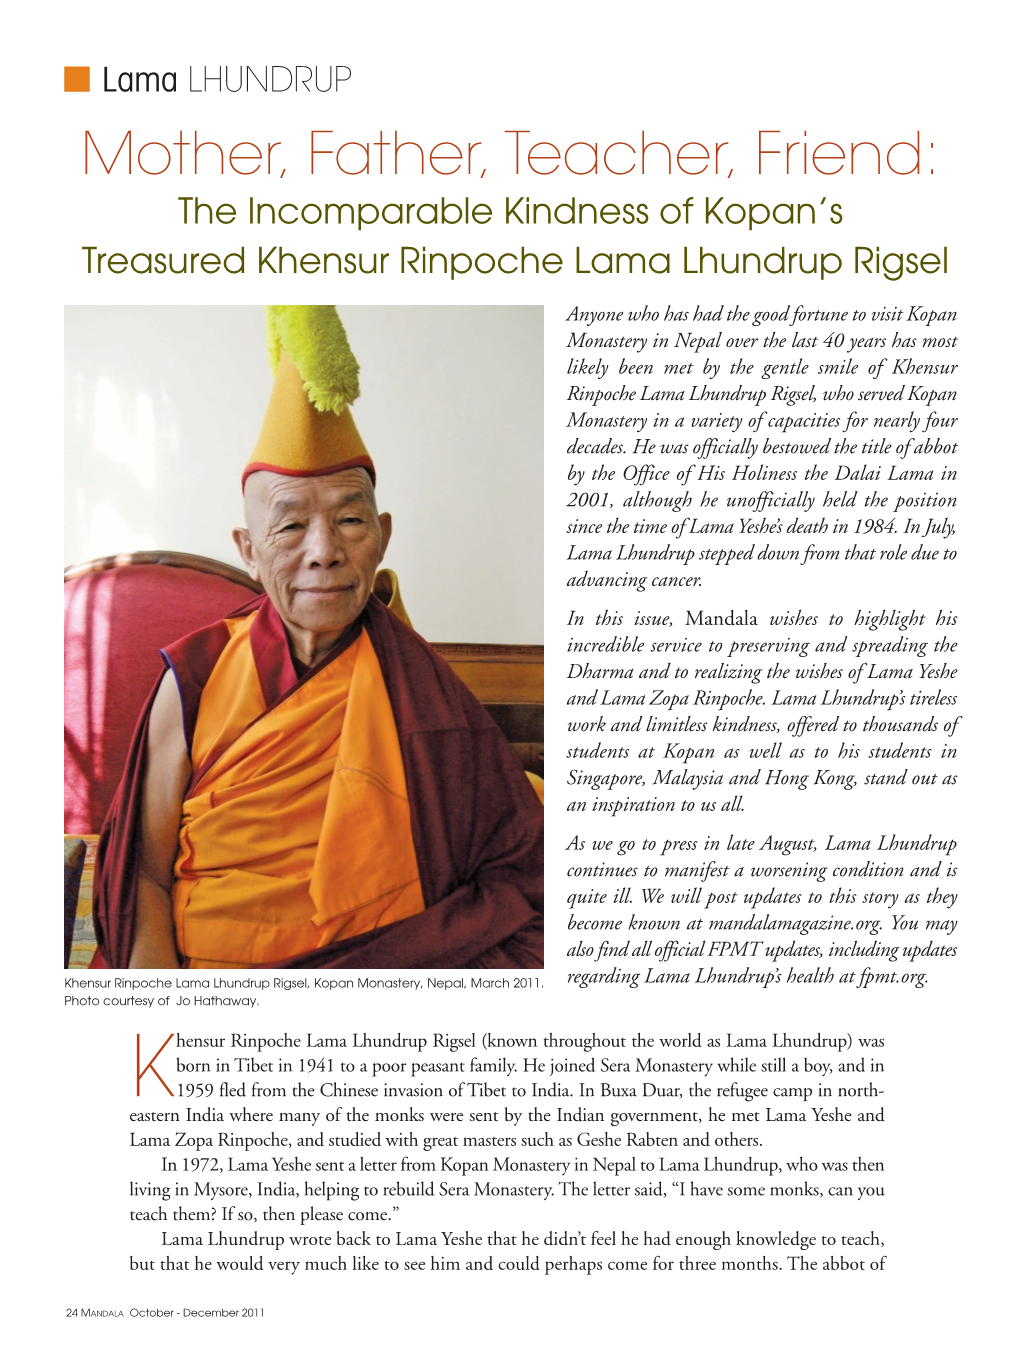 Tribute to Khensur Rinpoche Lama Lhundrup